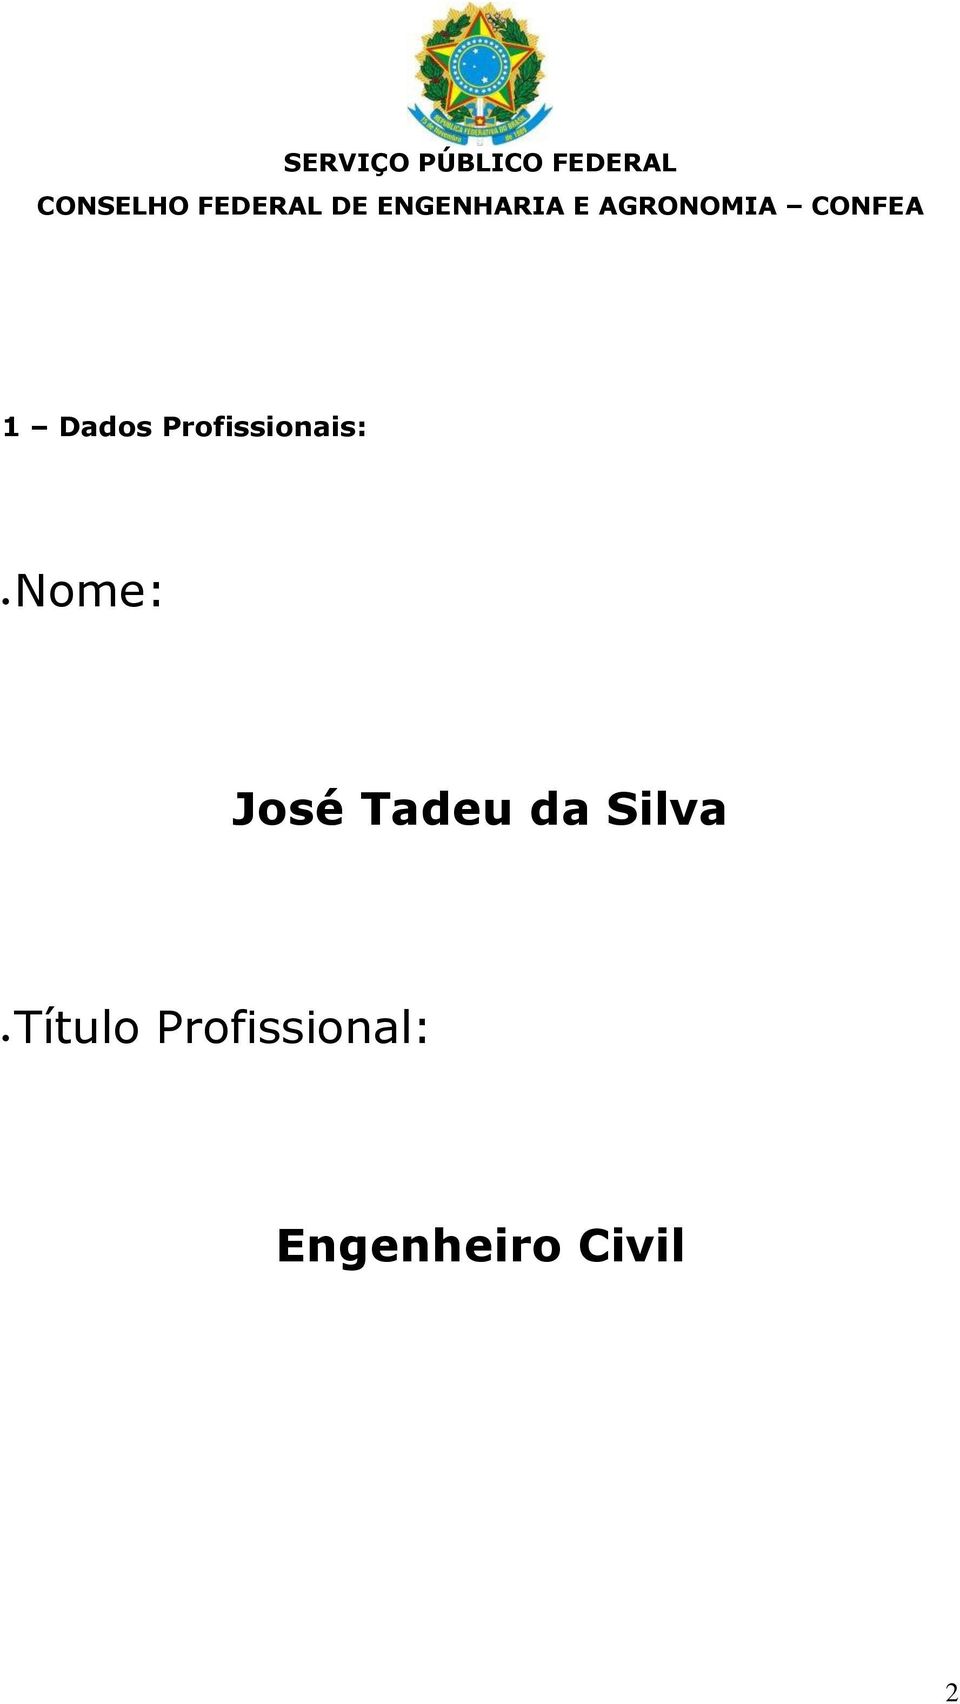 José Tadeu da Silva